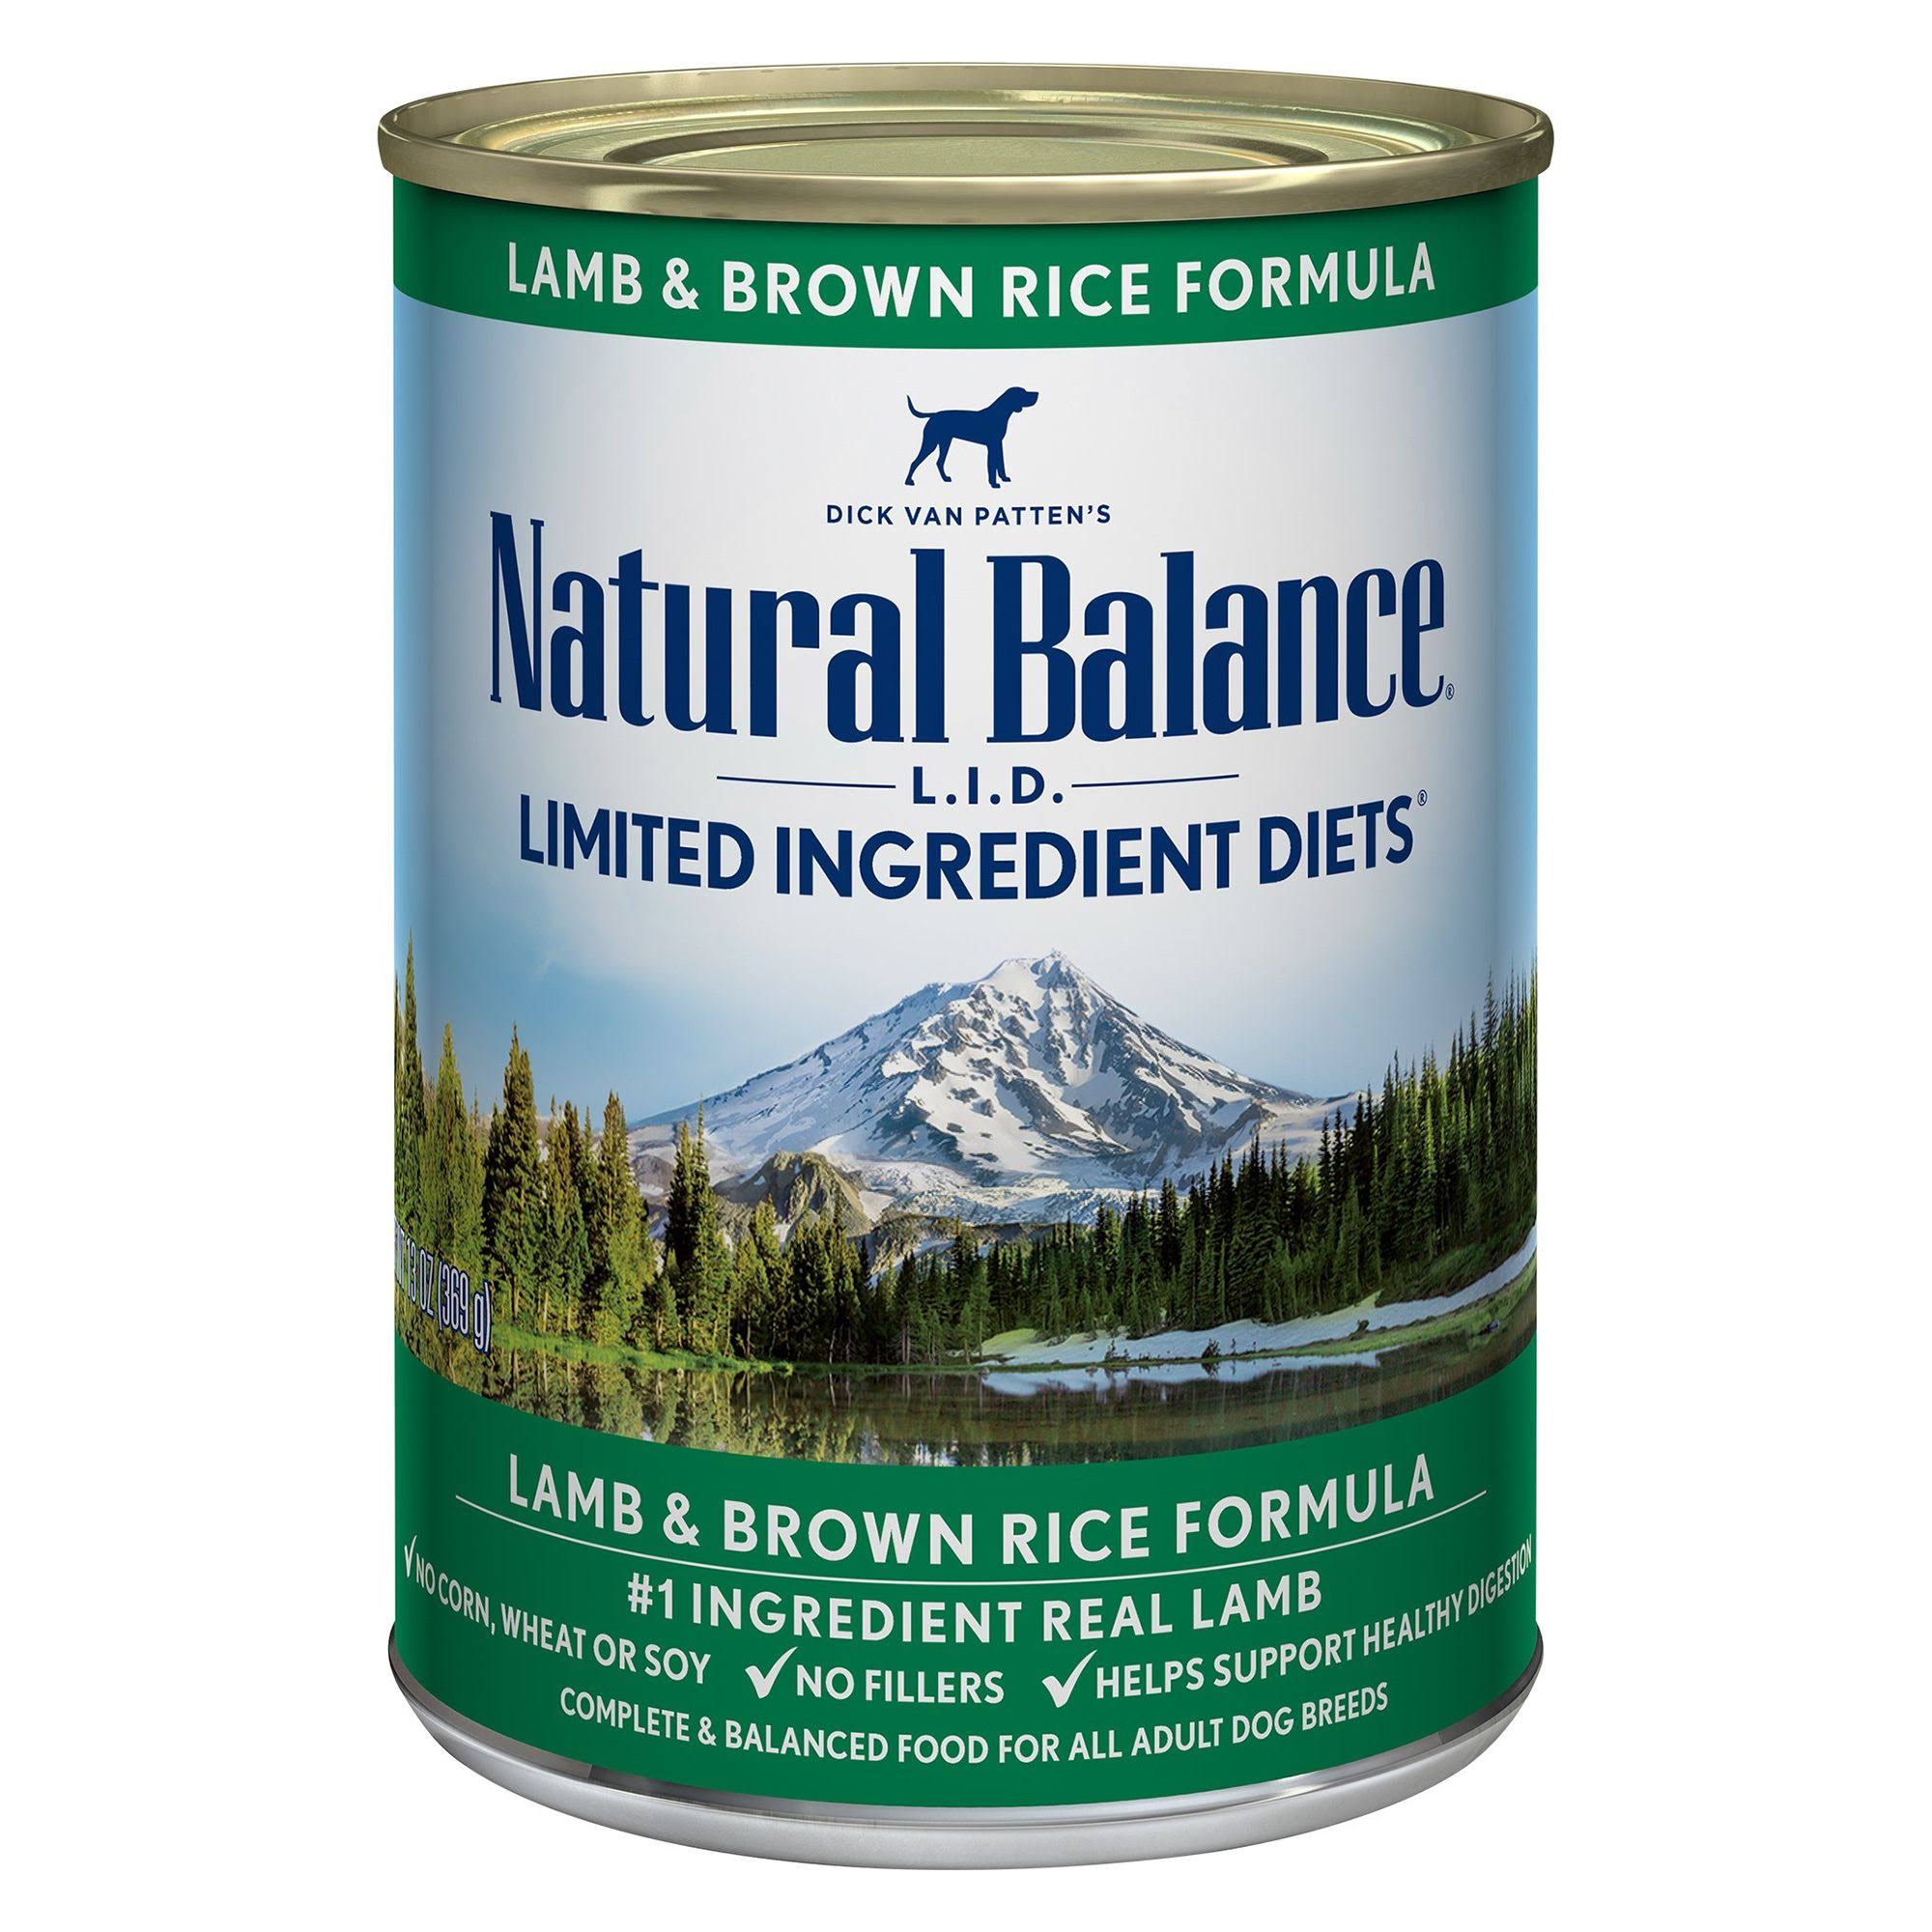 Natural Balance Limited Ingredient Diet Dog Food - Lamb & Brown Rice Formula, 369g